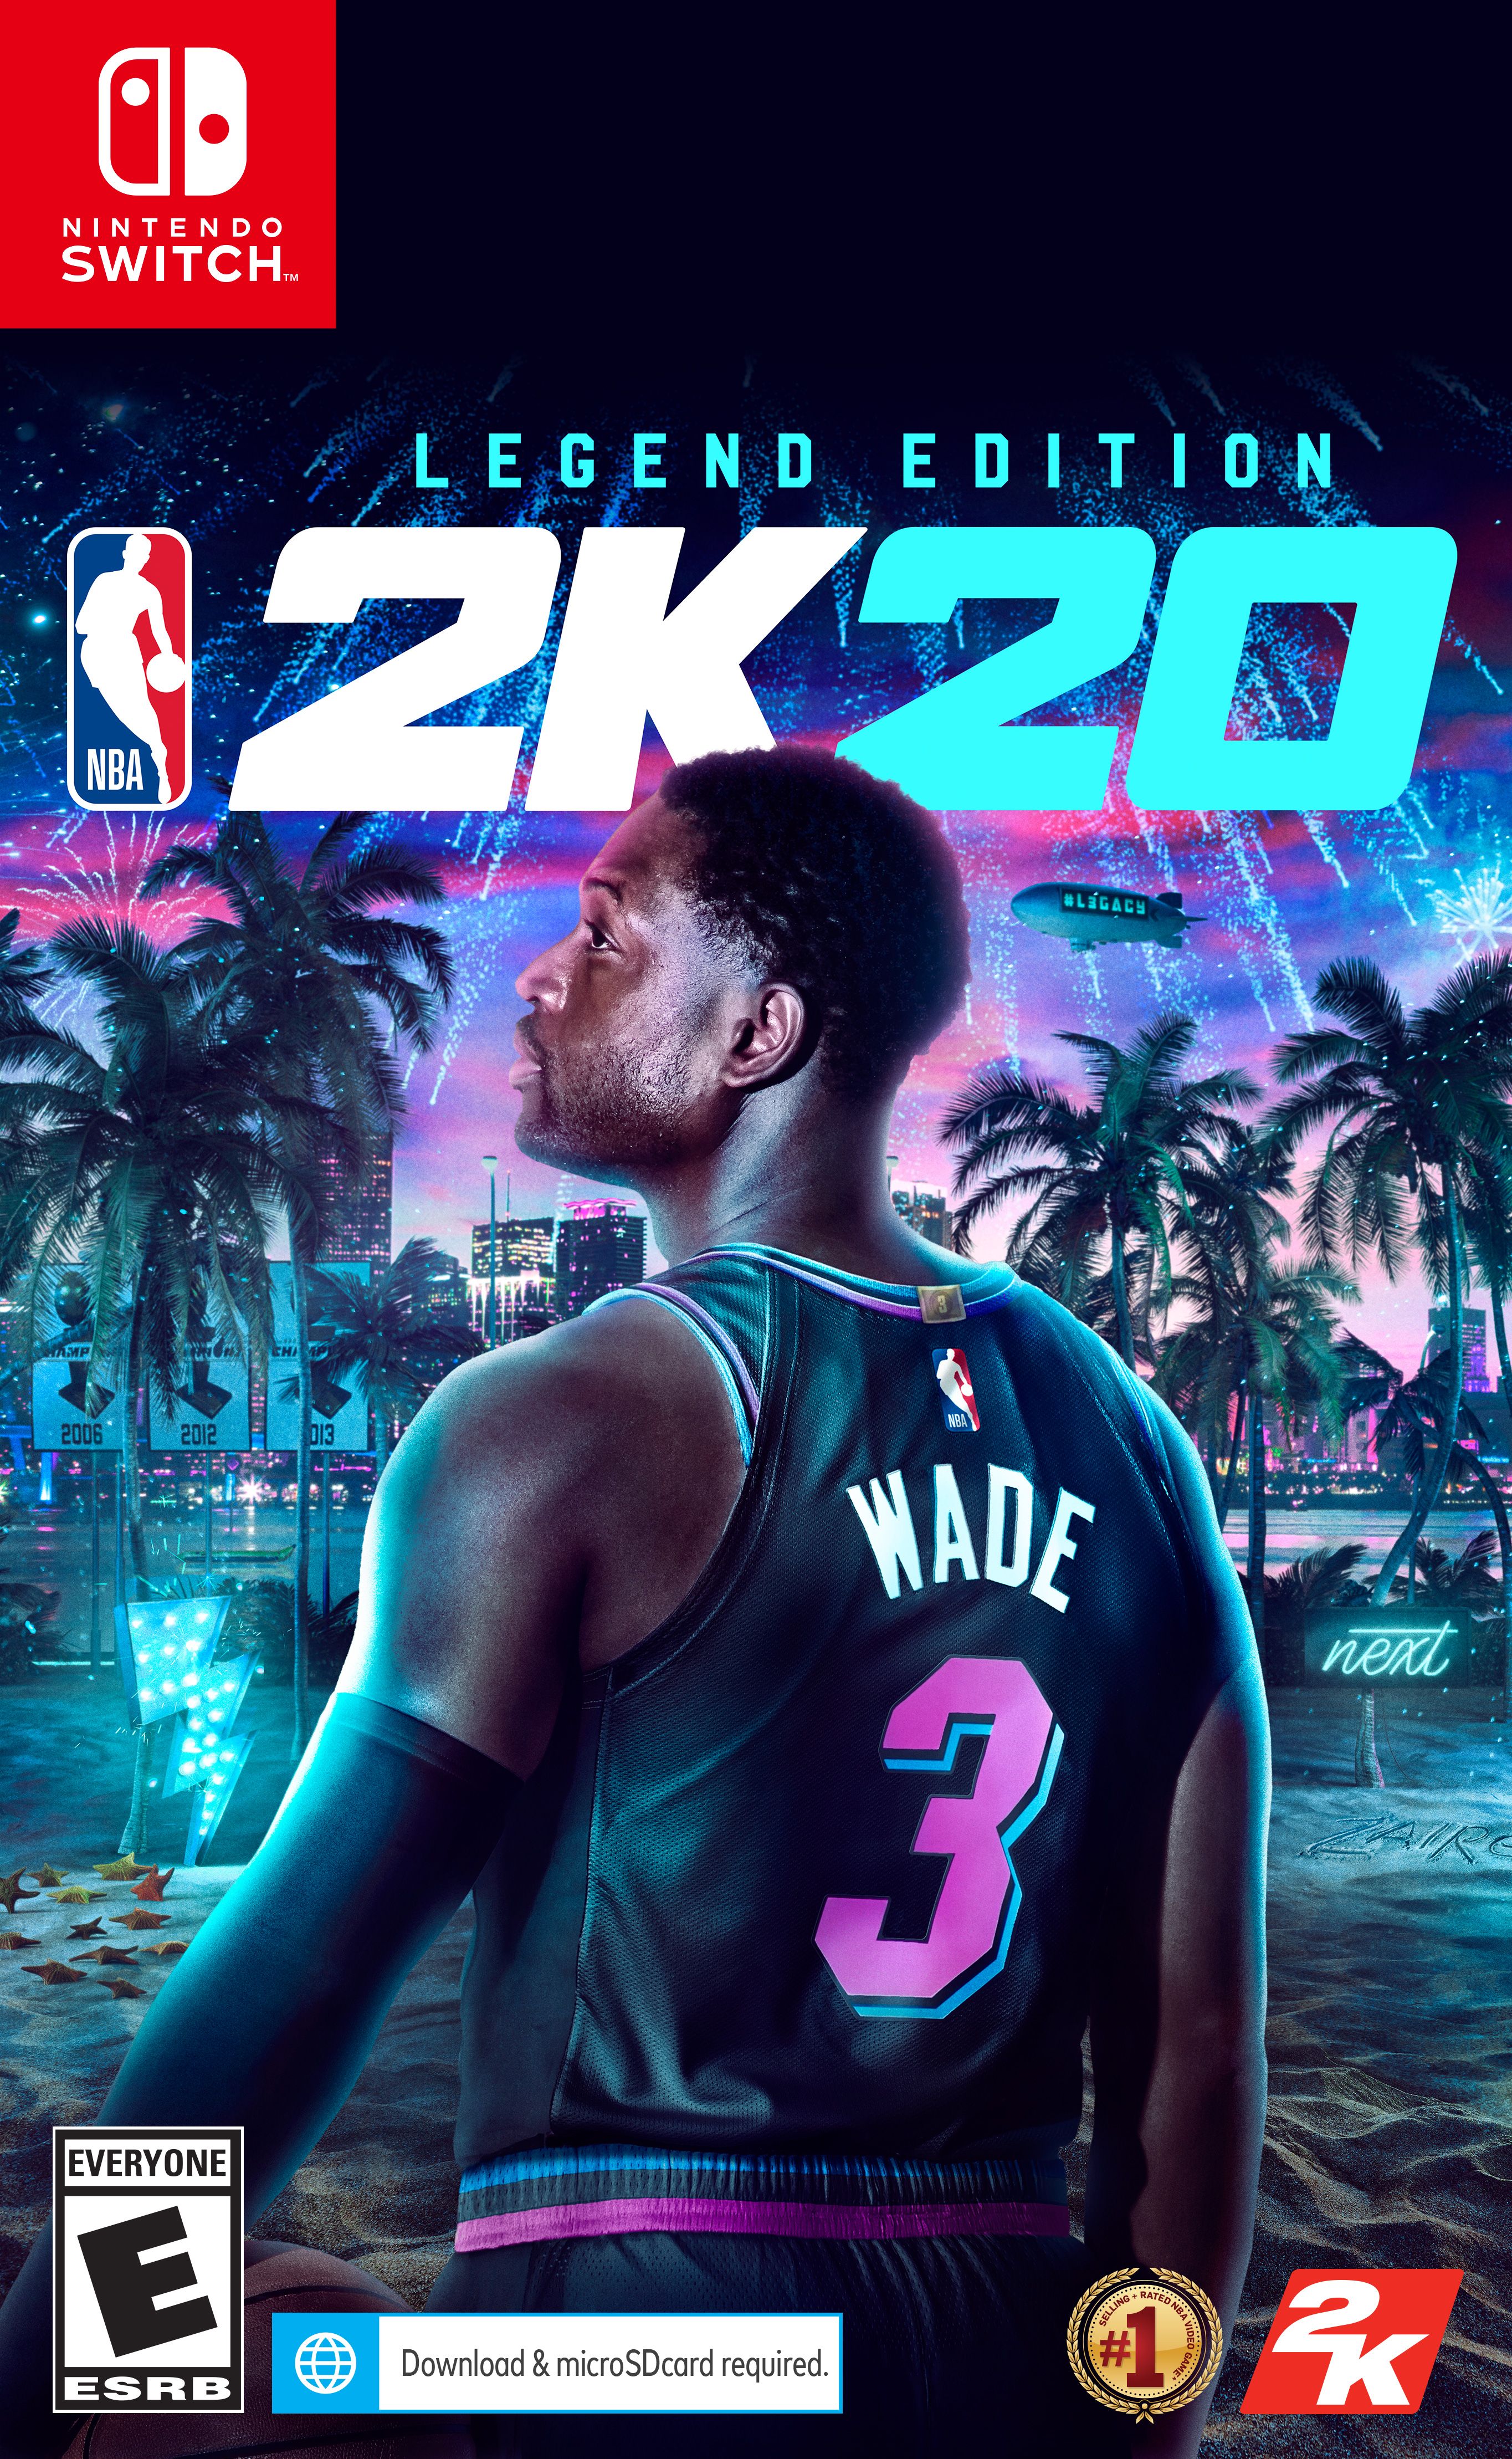 NBA 2K20 Legend Edition, 2K, Nintendo Switch, 710425555336 - Walmart.com